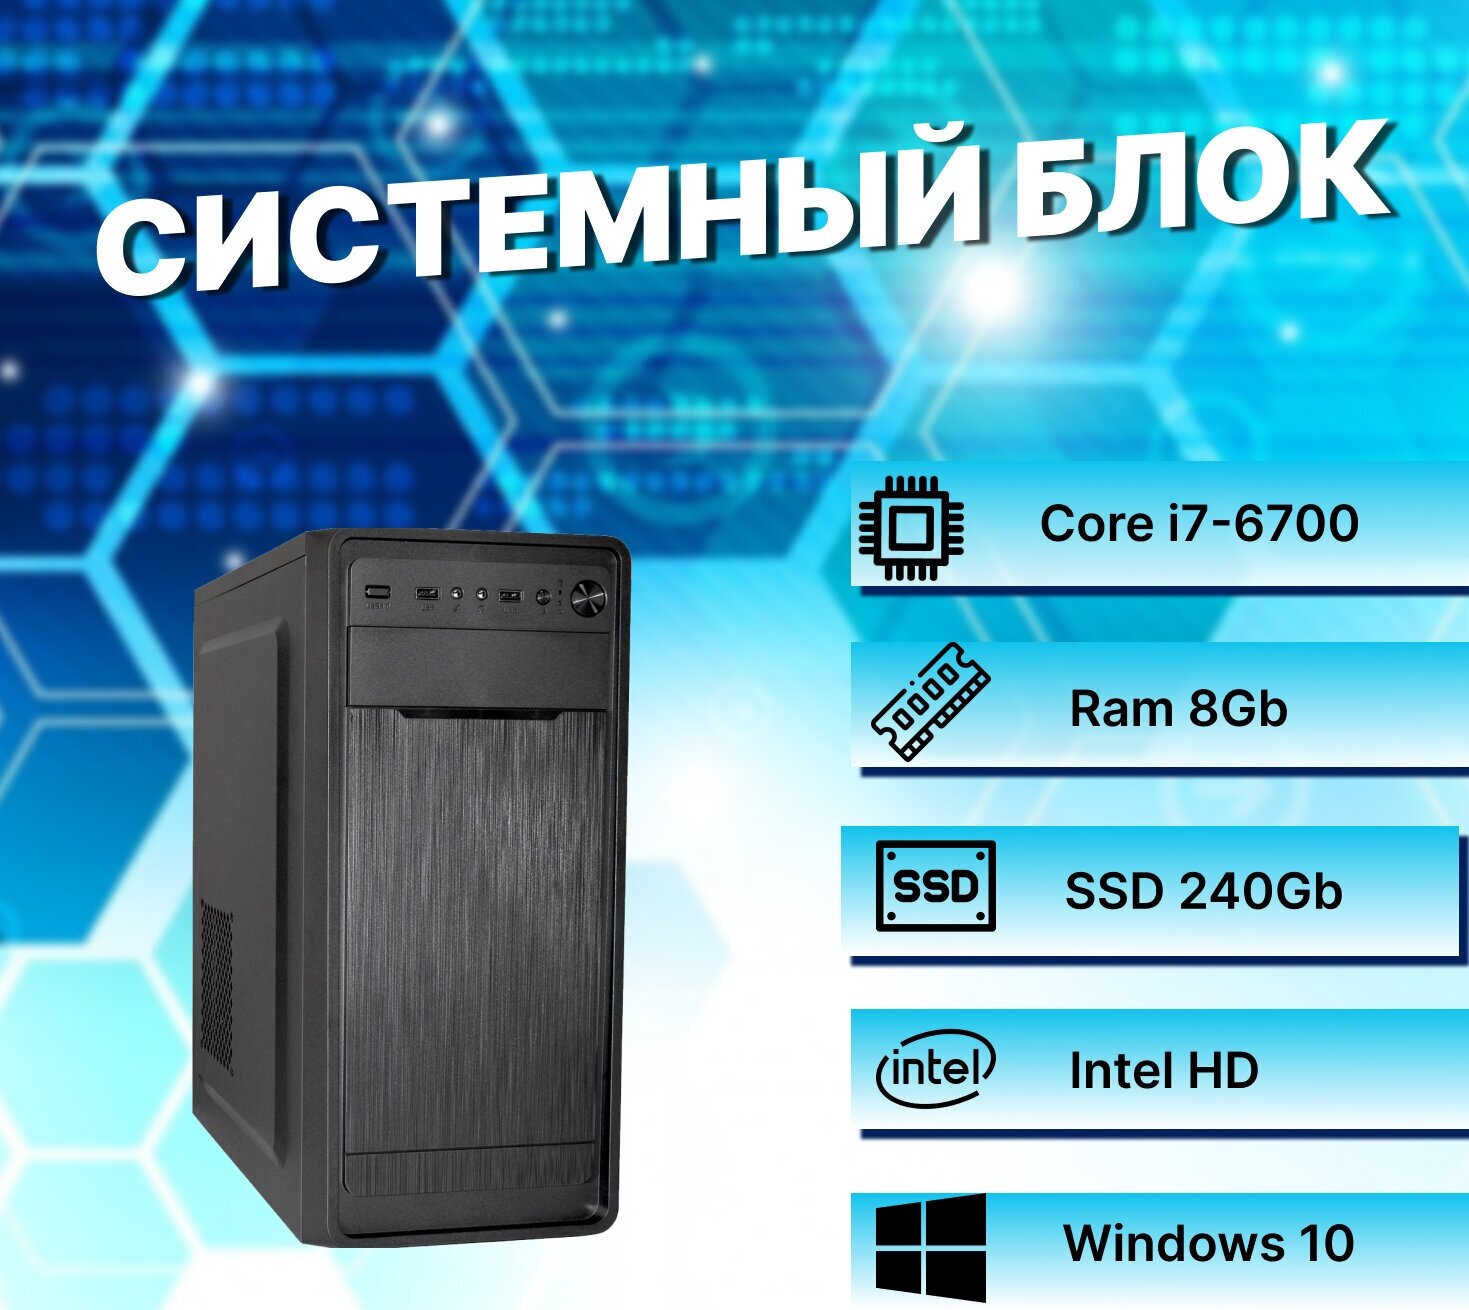 Системный блок Intel Core I7-6700 (3.4ГГц)/ RAM 8Gb/ SSD 240Gb/ Intel HD/ Windows 10 Pro